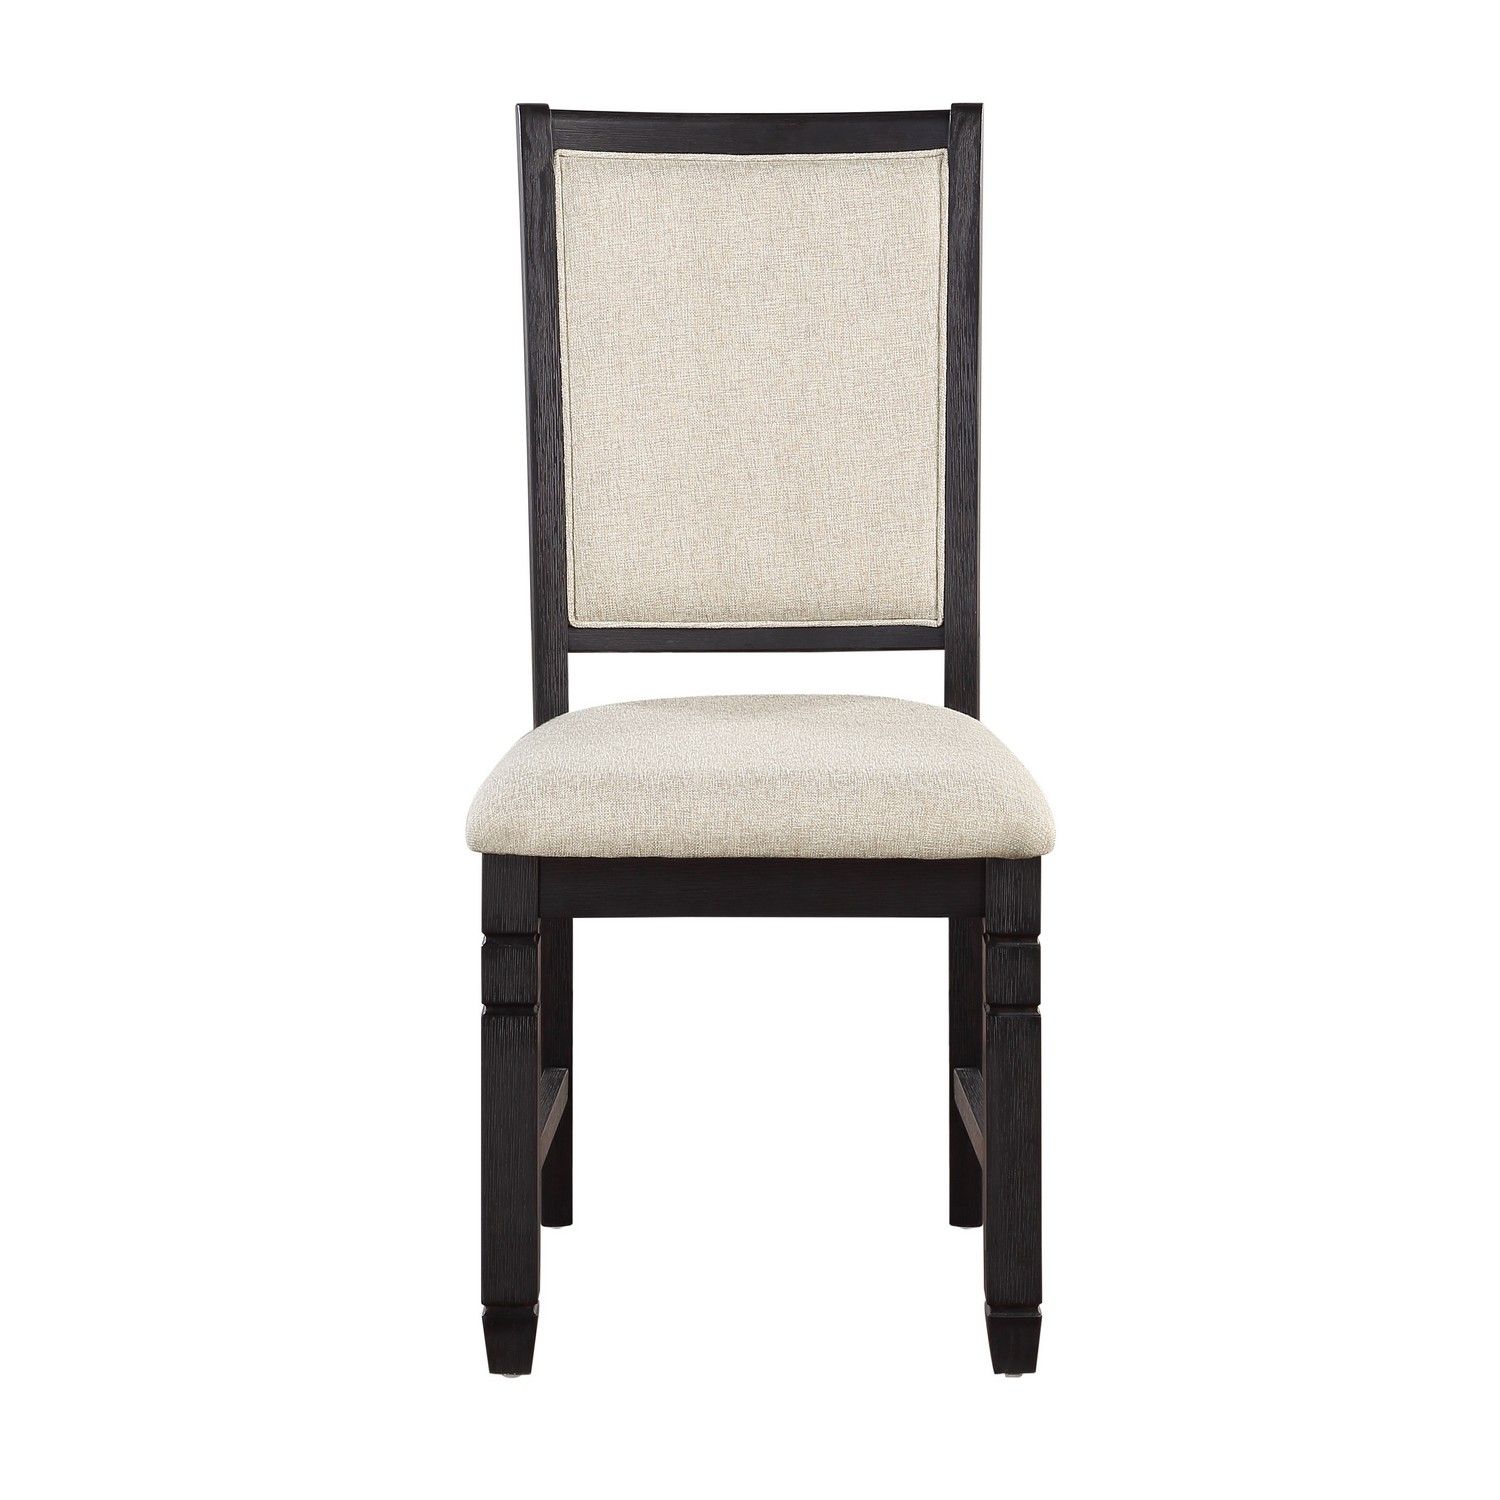 Homelegance Asher Side Chair - Brown/Black